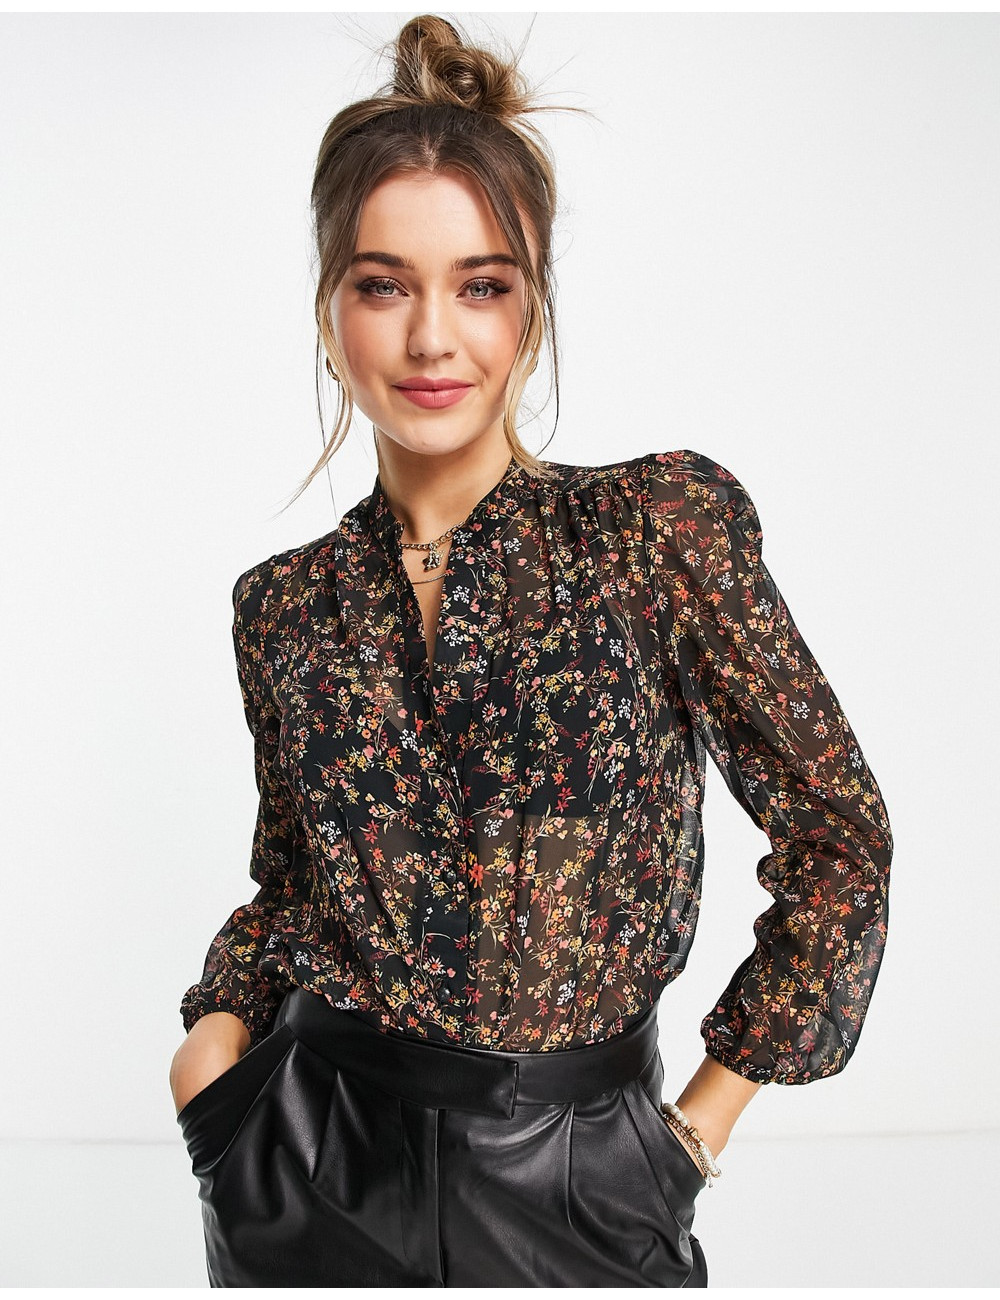 Lispy shirt in floral print